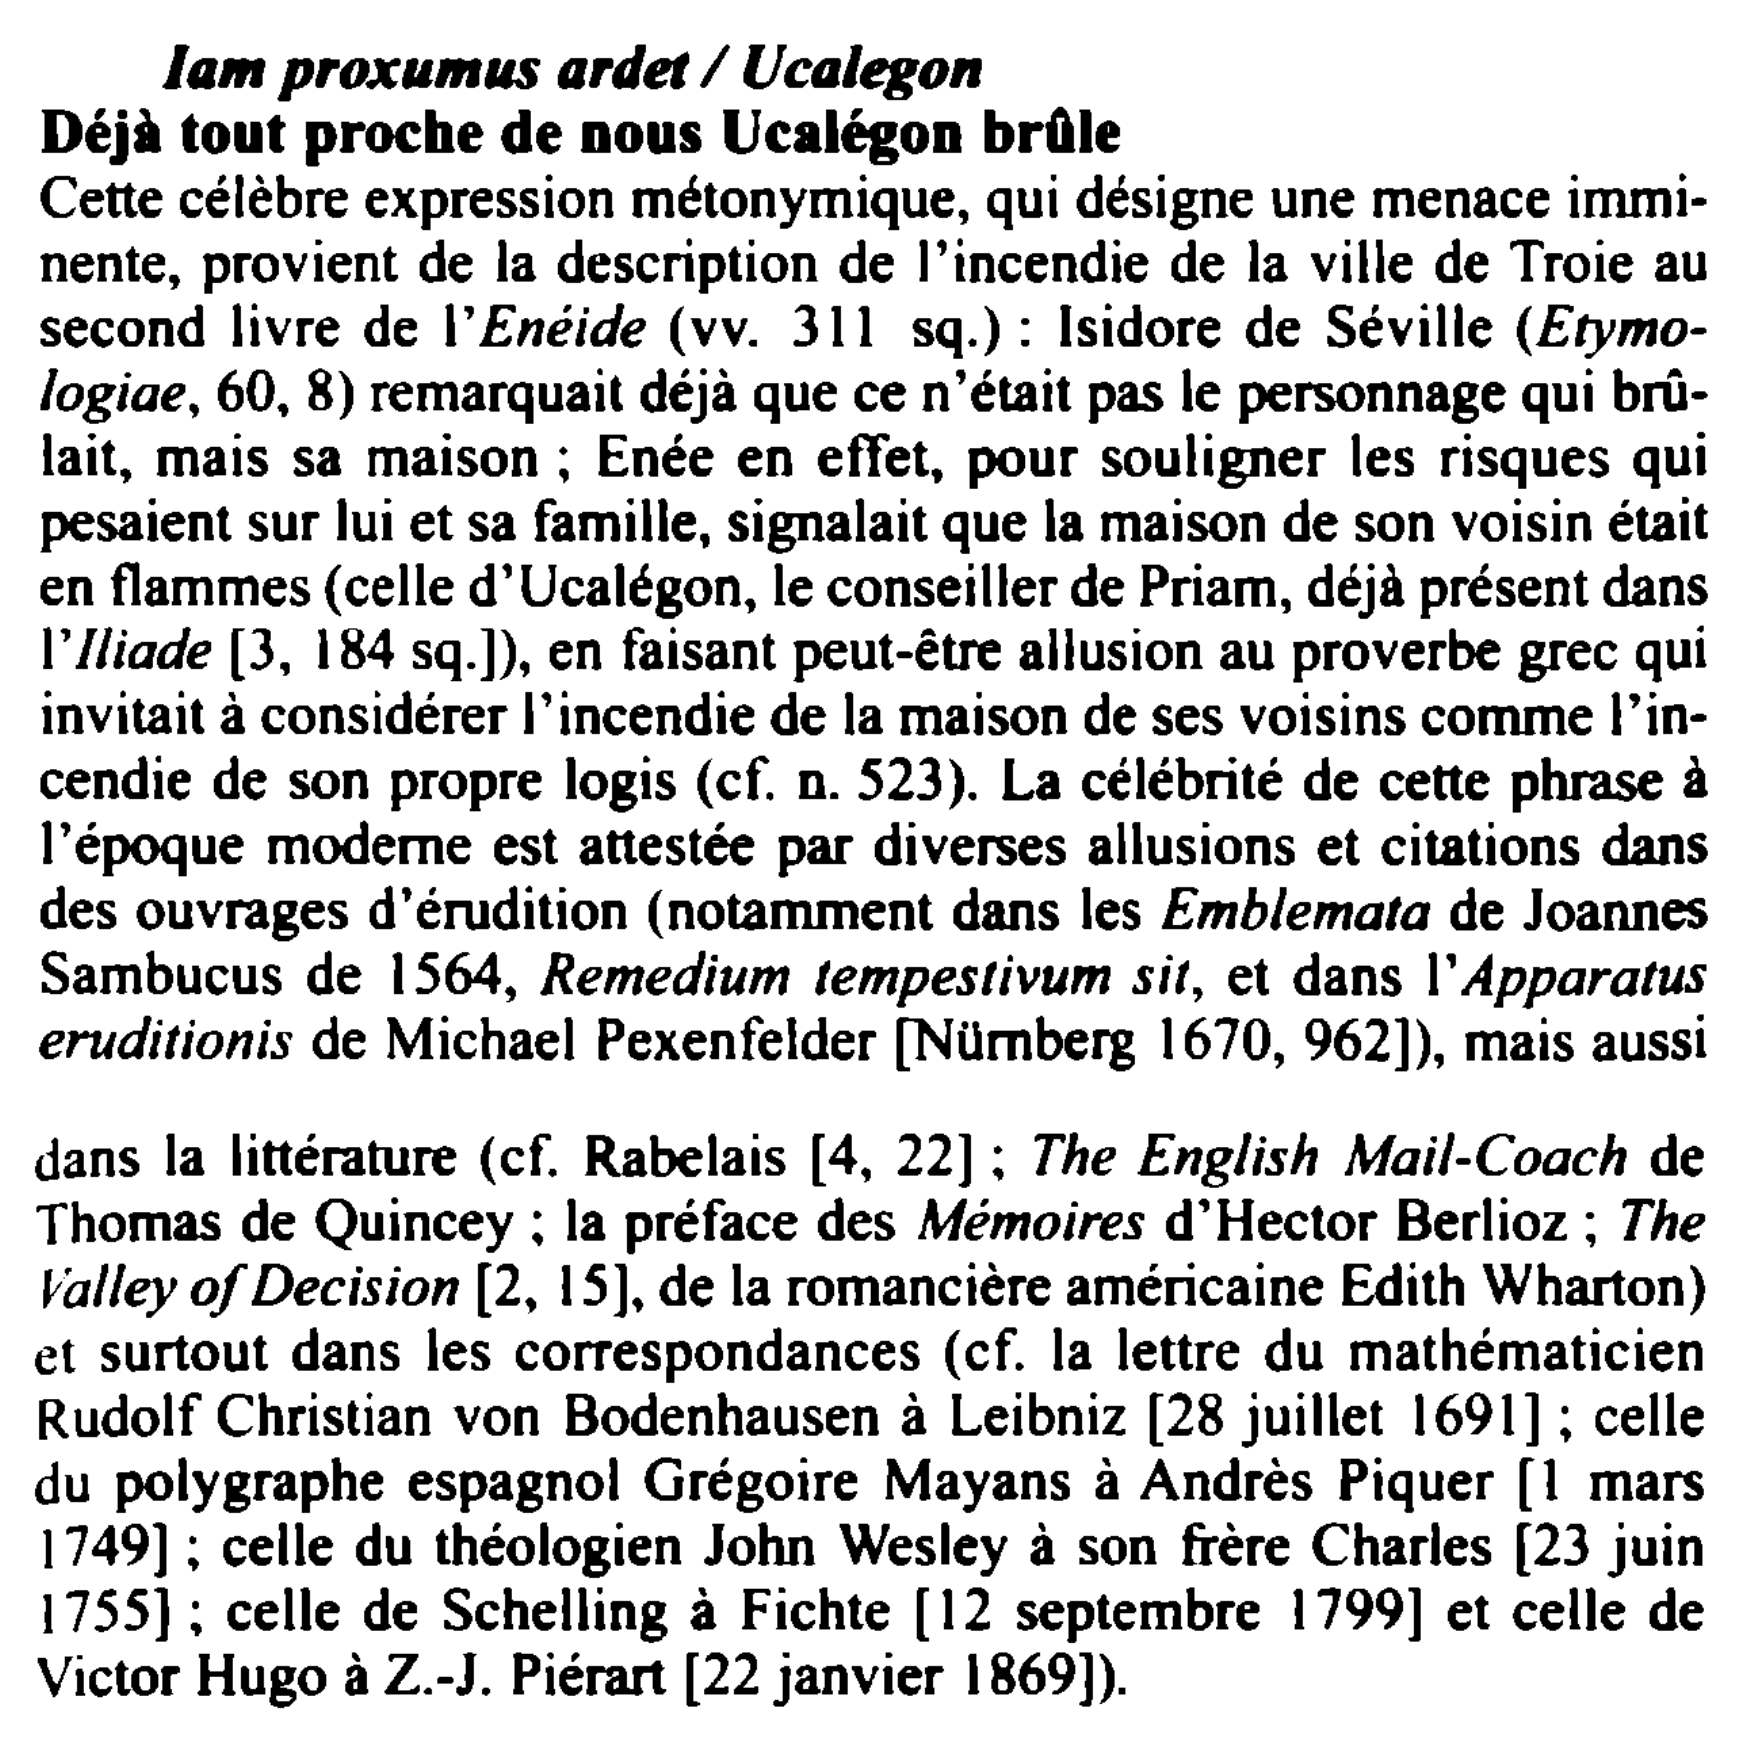 Prévisualisation du document Iam proximus ardet / Ucalegon